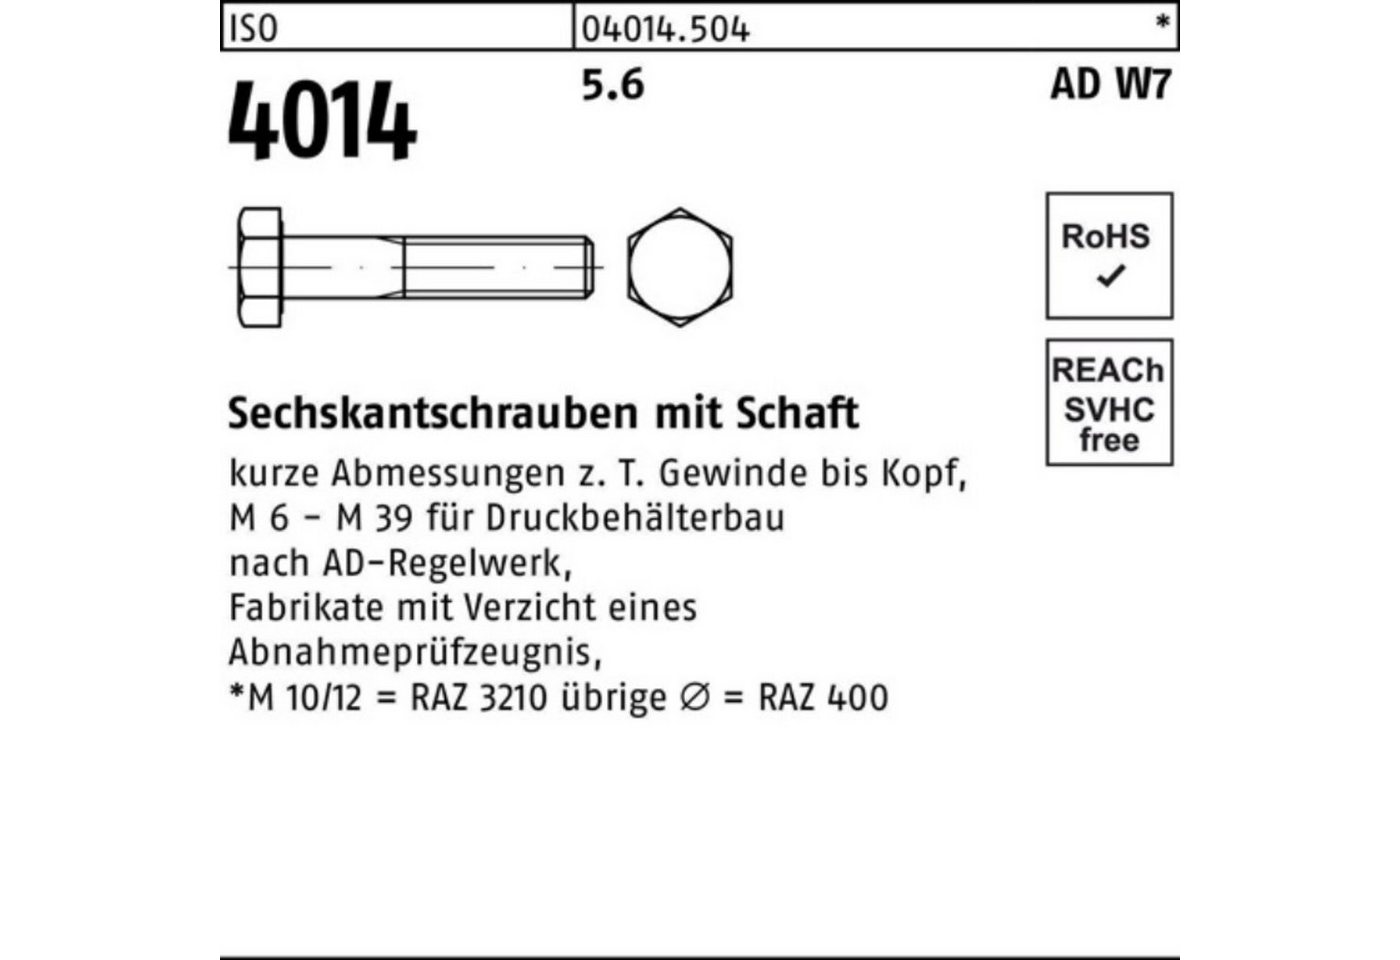 Bufab Sechskantschraube 100er Pack Sechskantschraube ISO 4014 Schaft M20x 240 5.6 W7 1 Stück von Bufab